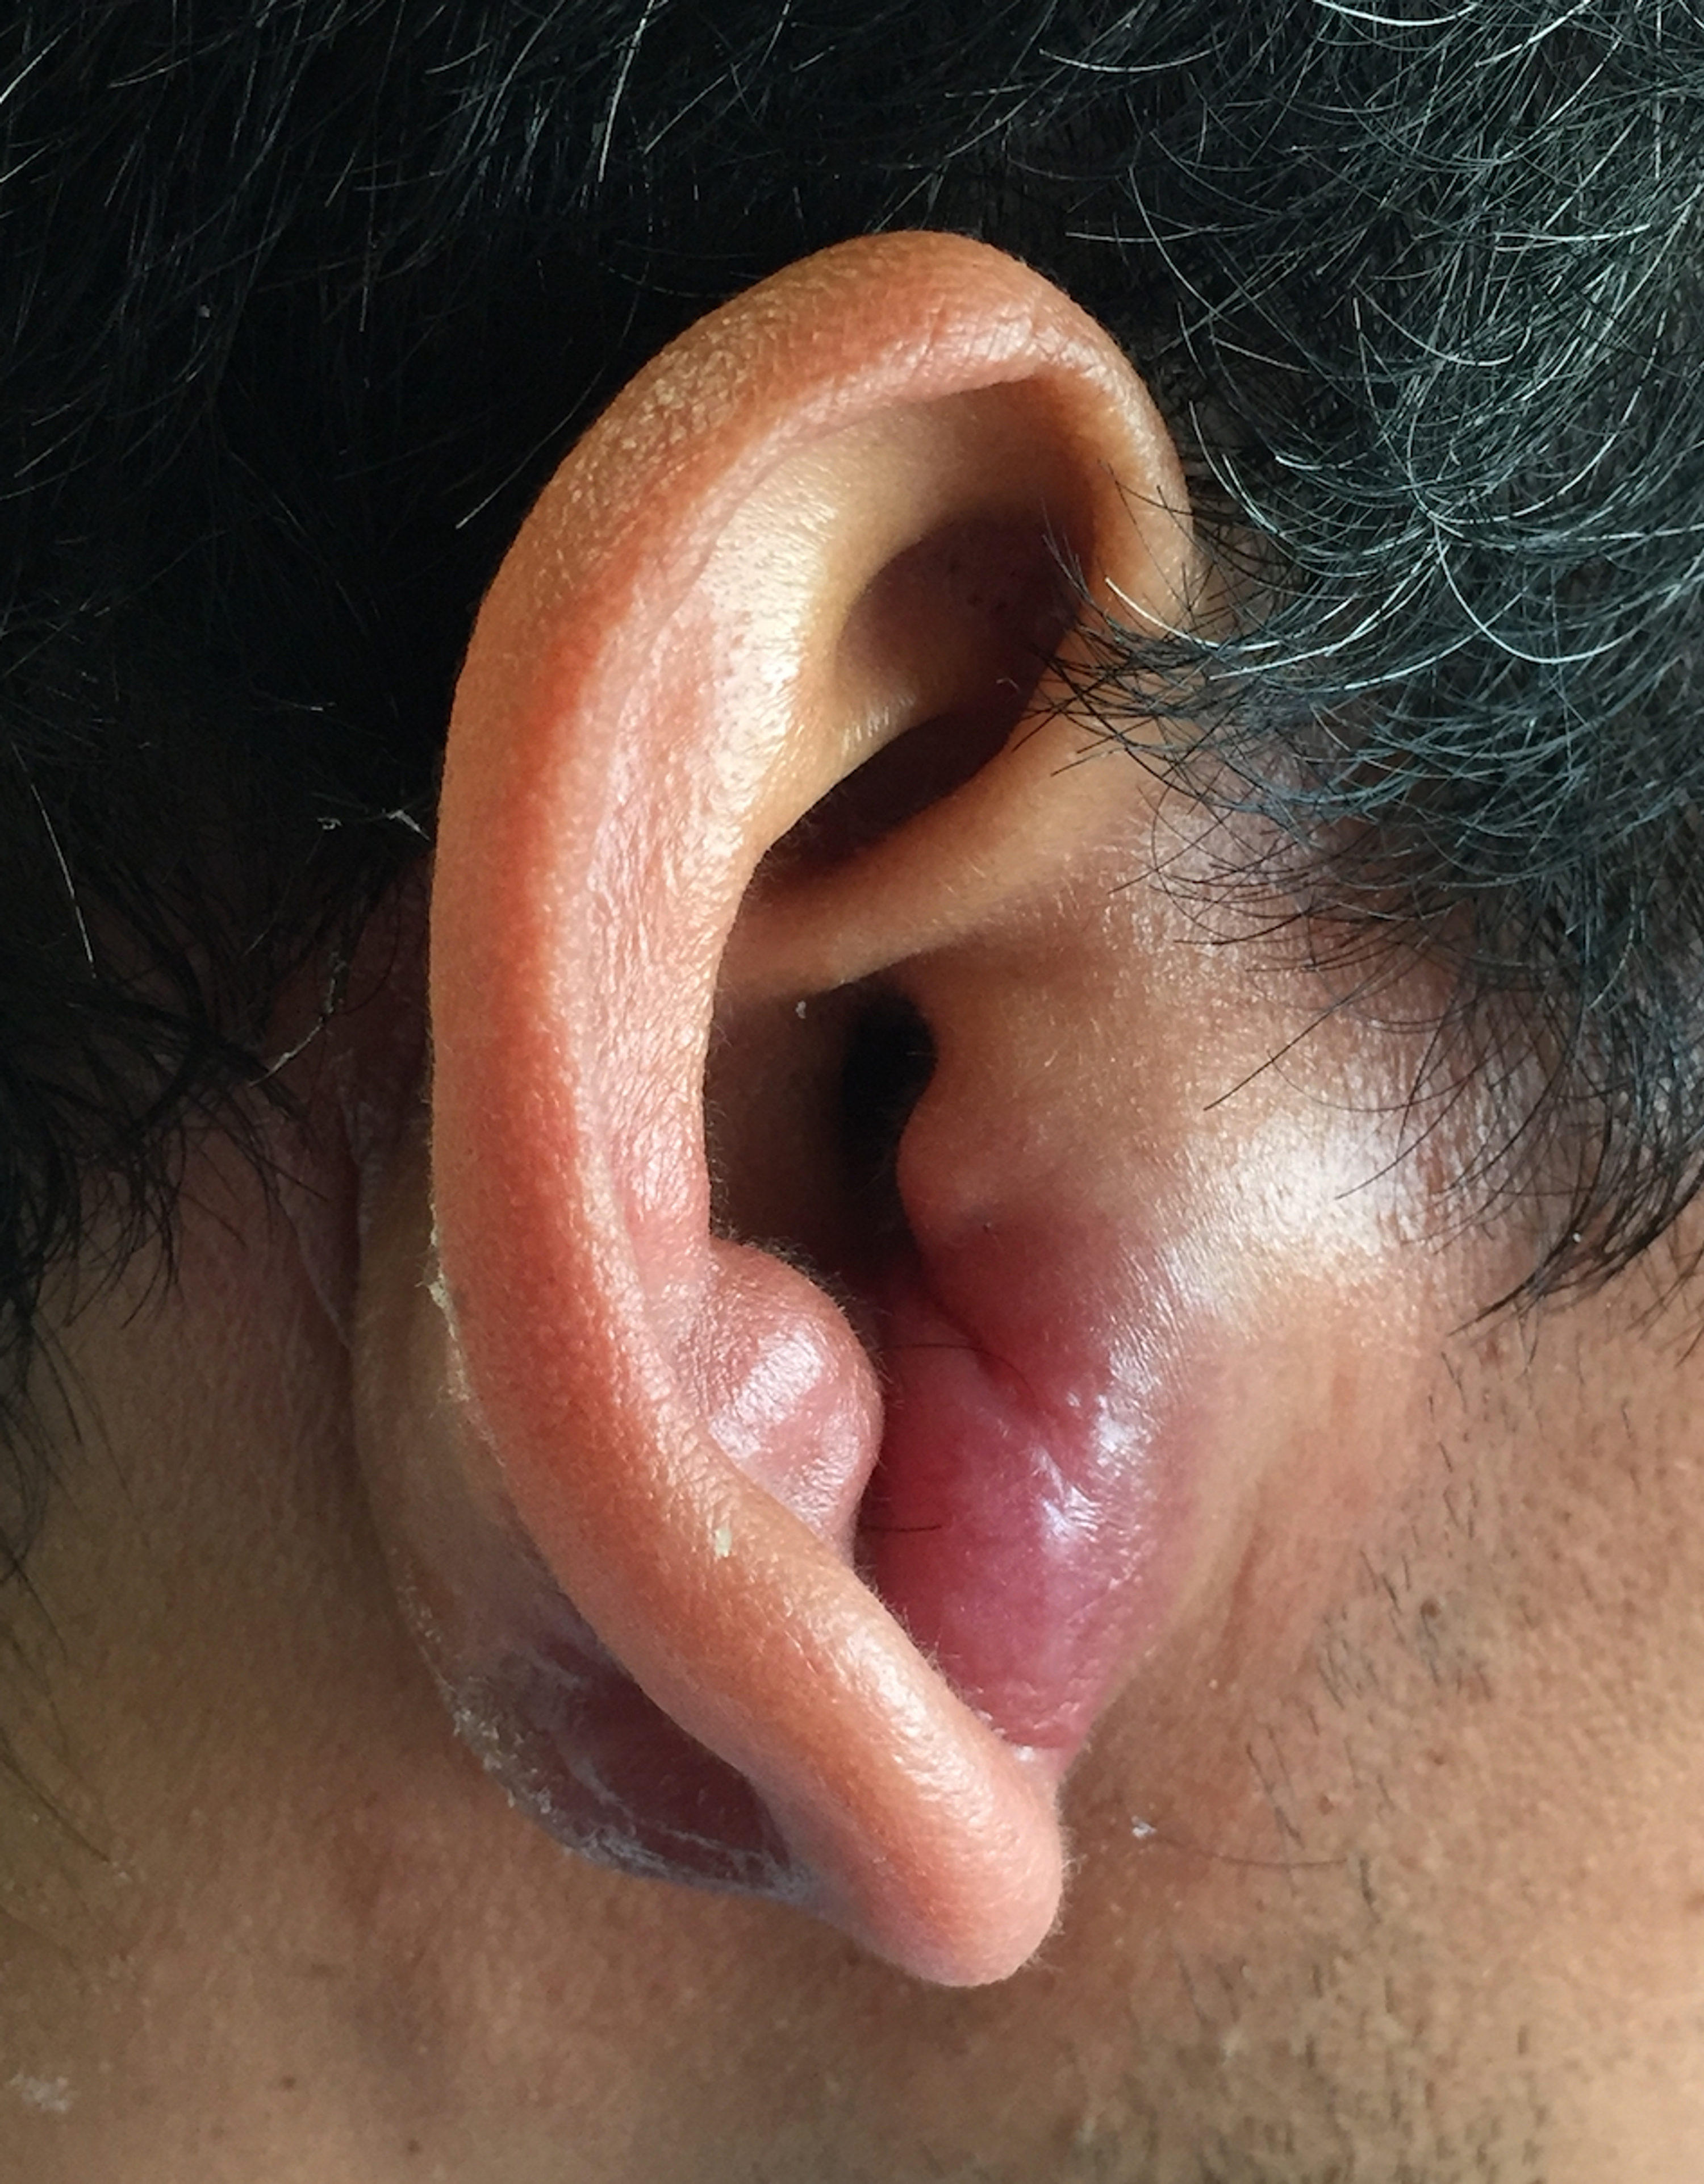 Cureus | Lymphoma Masquerading as an Ear Mass | Article